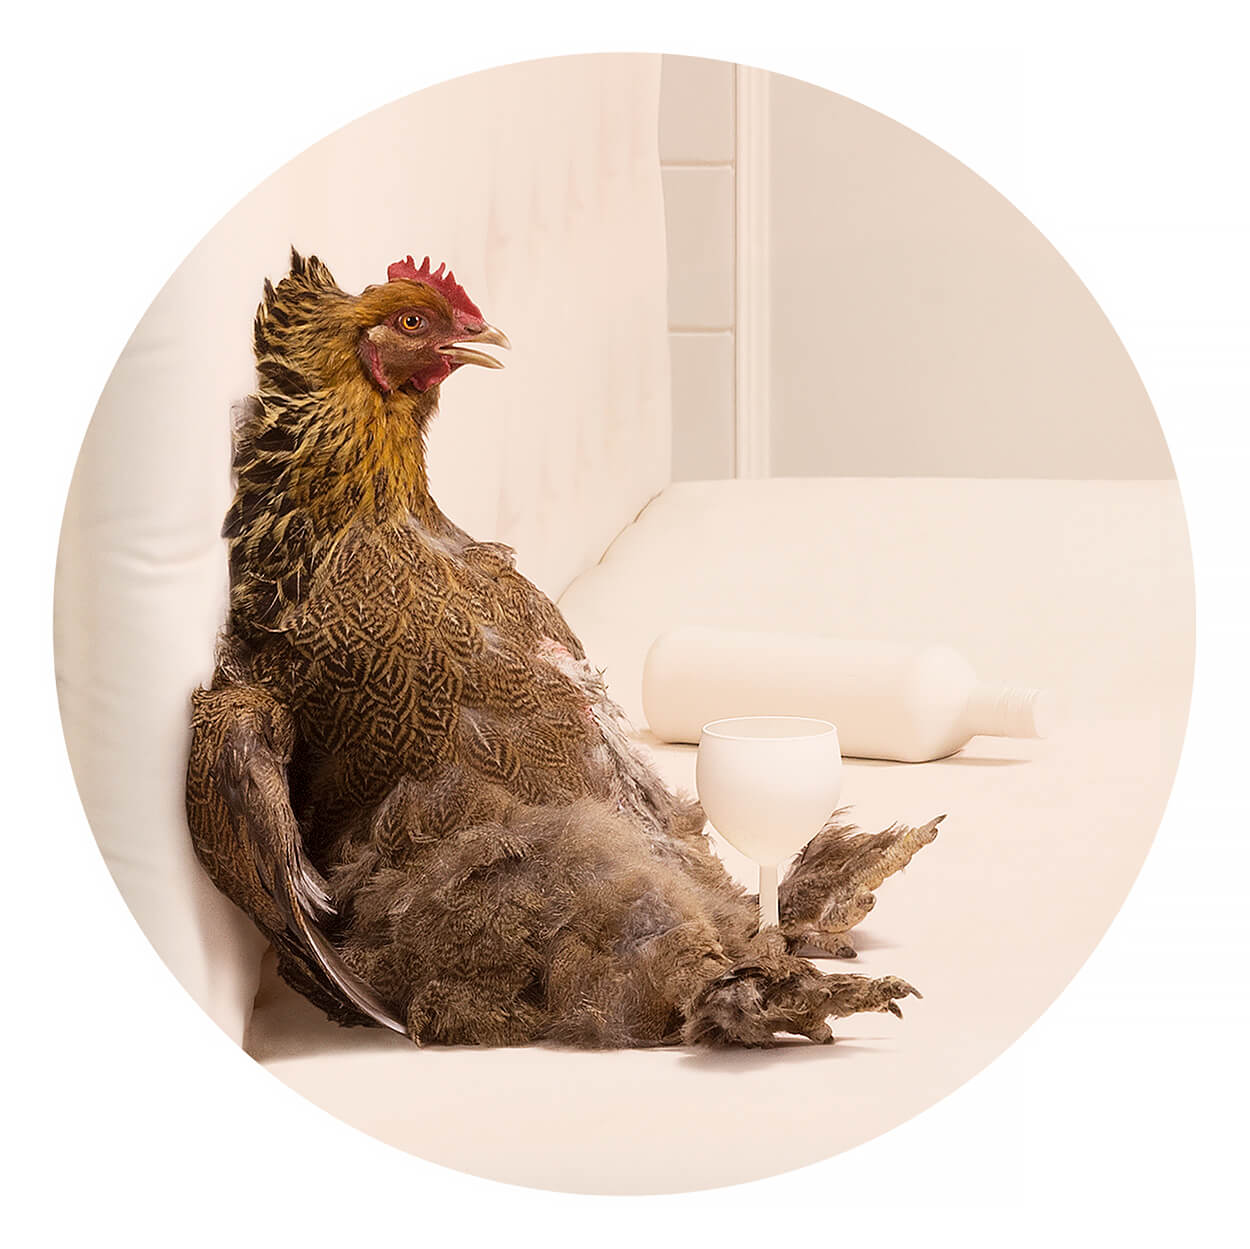 Chicken<p>Courtesy Bransch NY & EU / © Frieke Janssens</p>